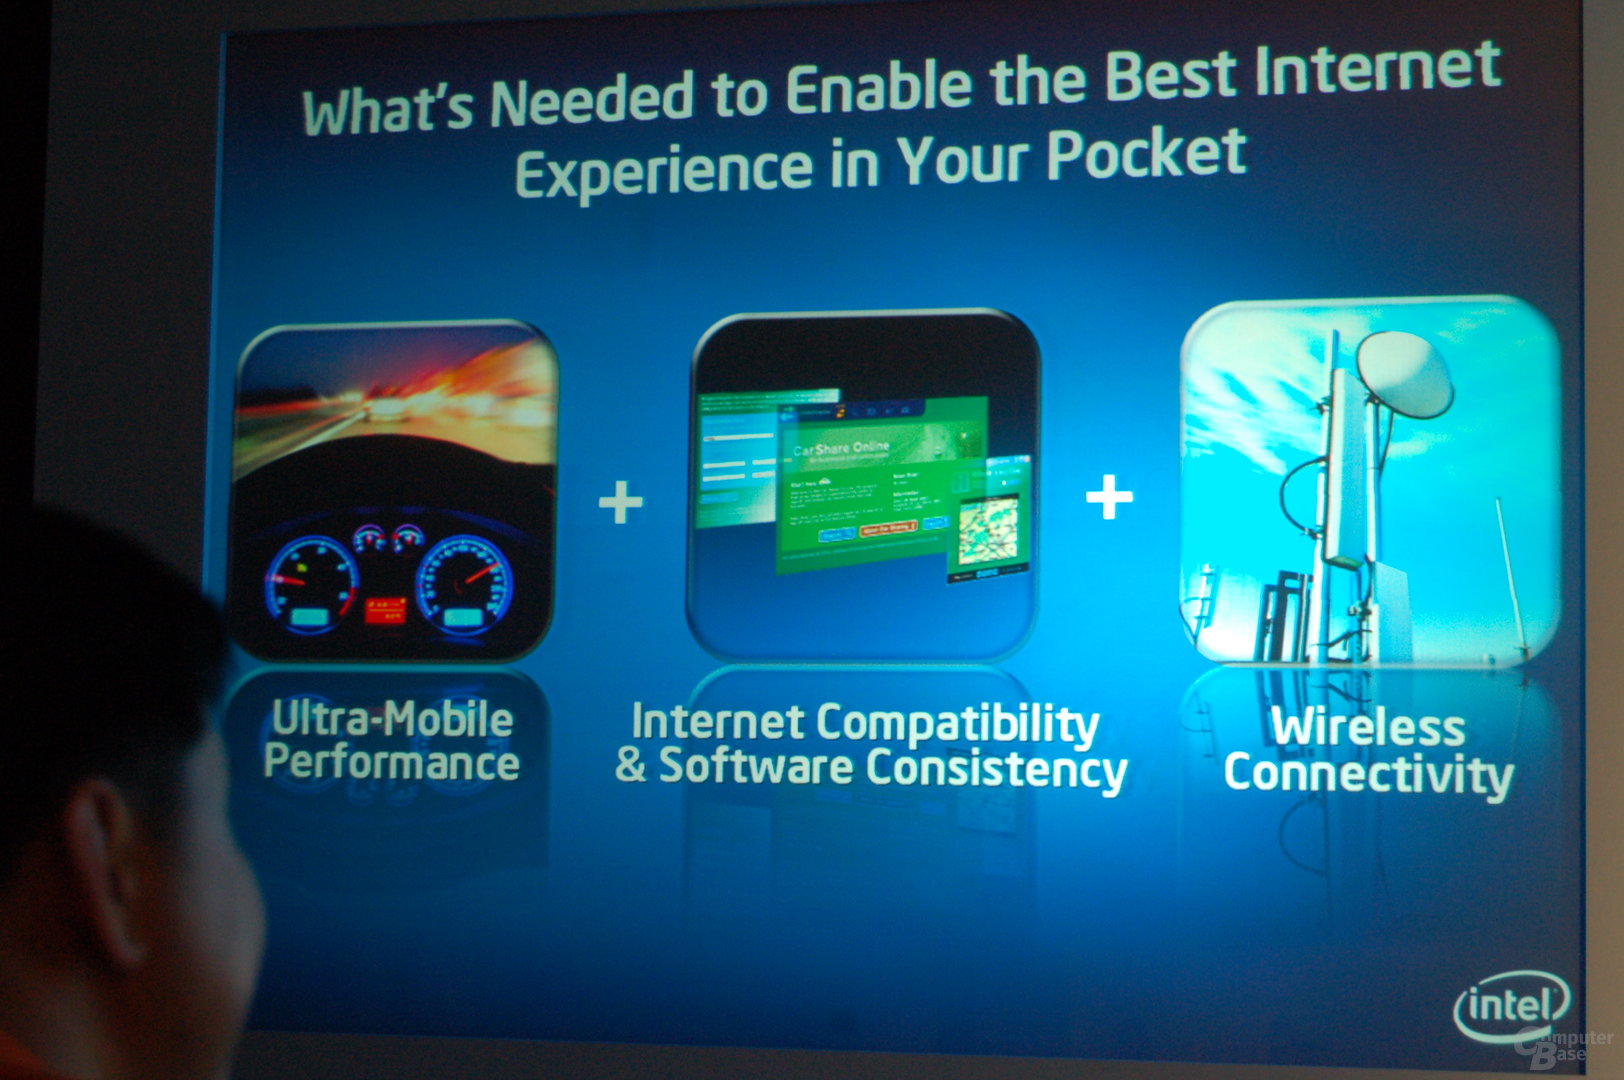 Computex: Intel Atom / Mobile Internet Devices